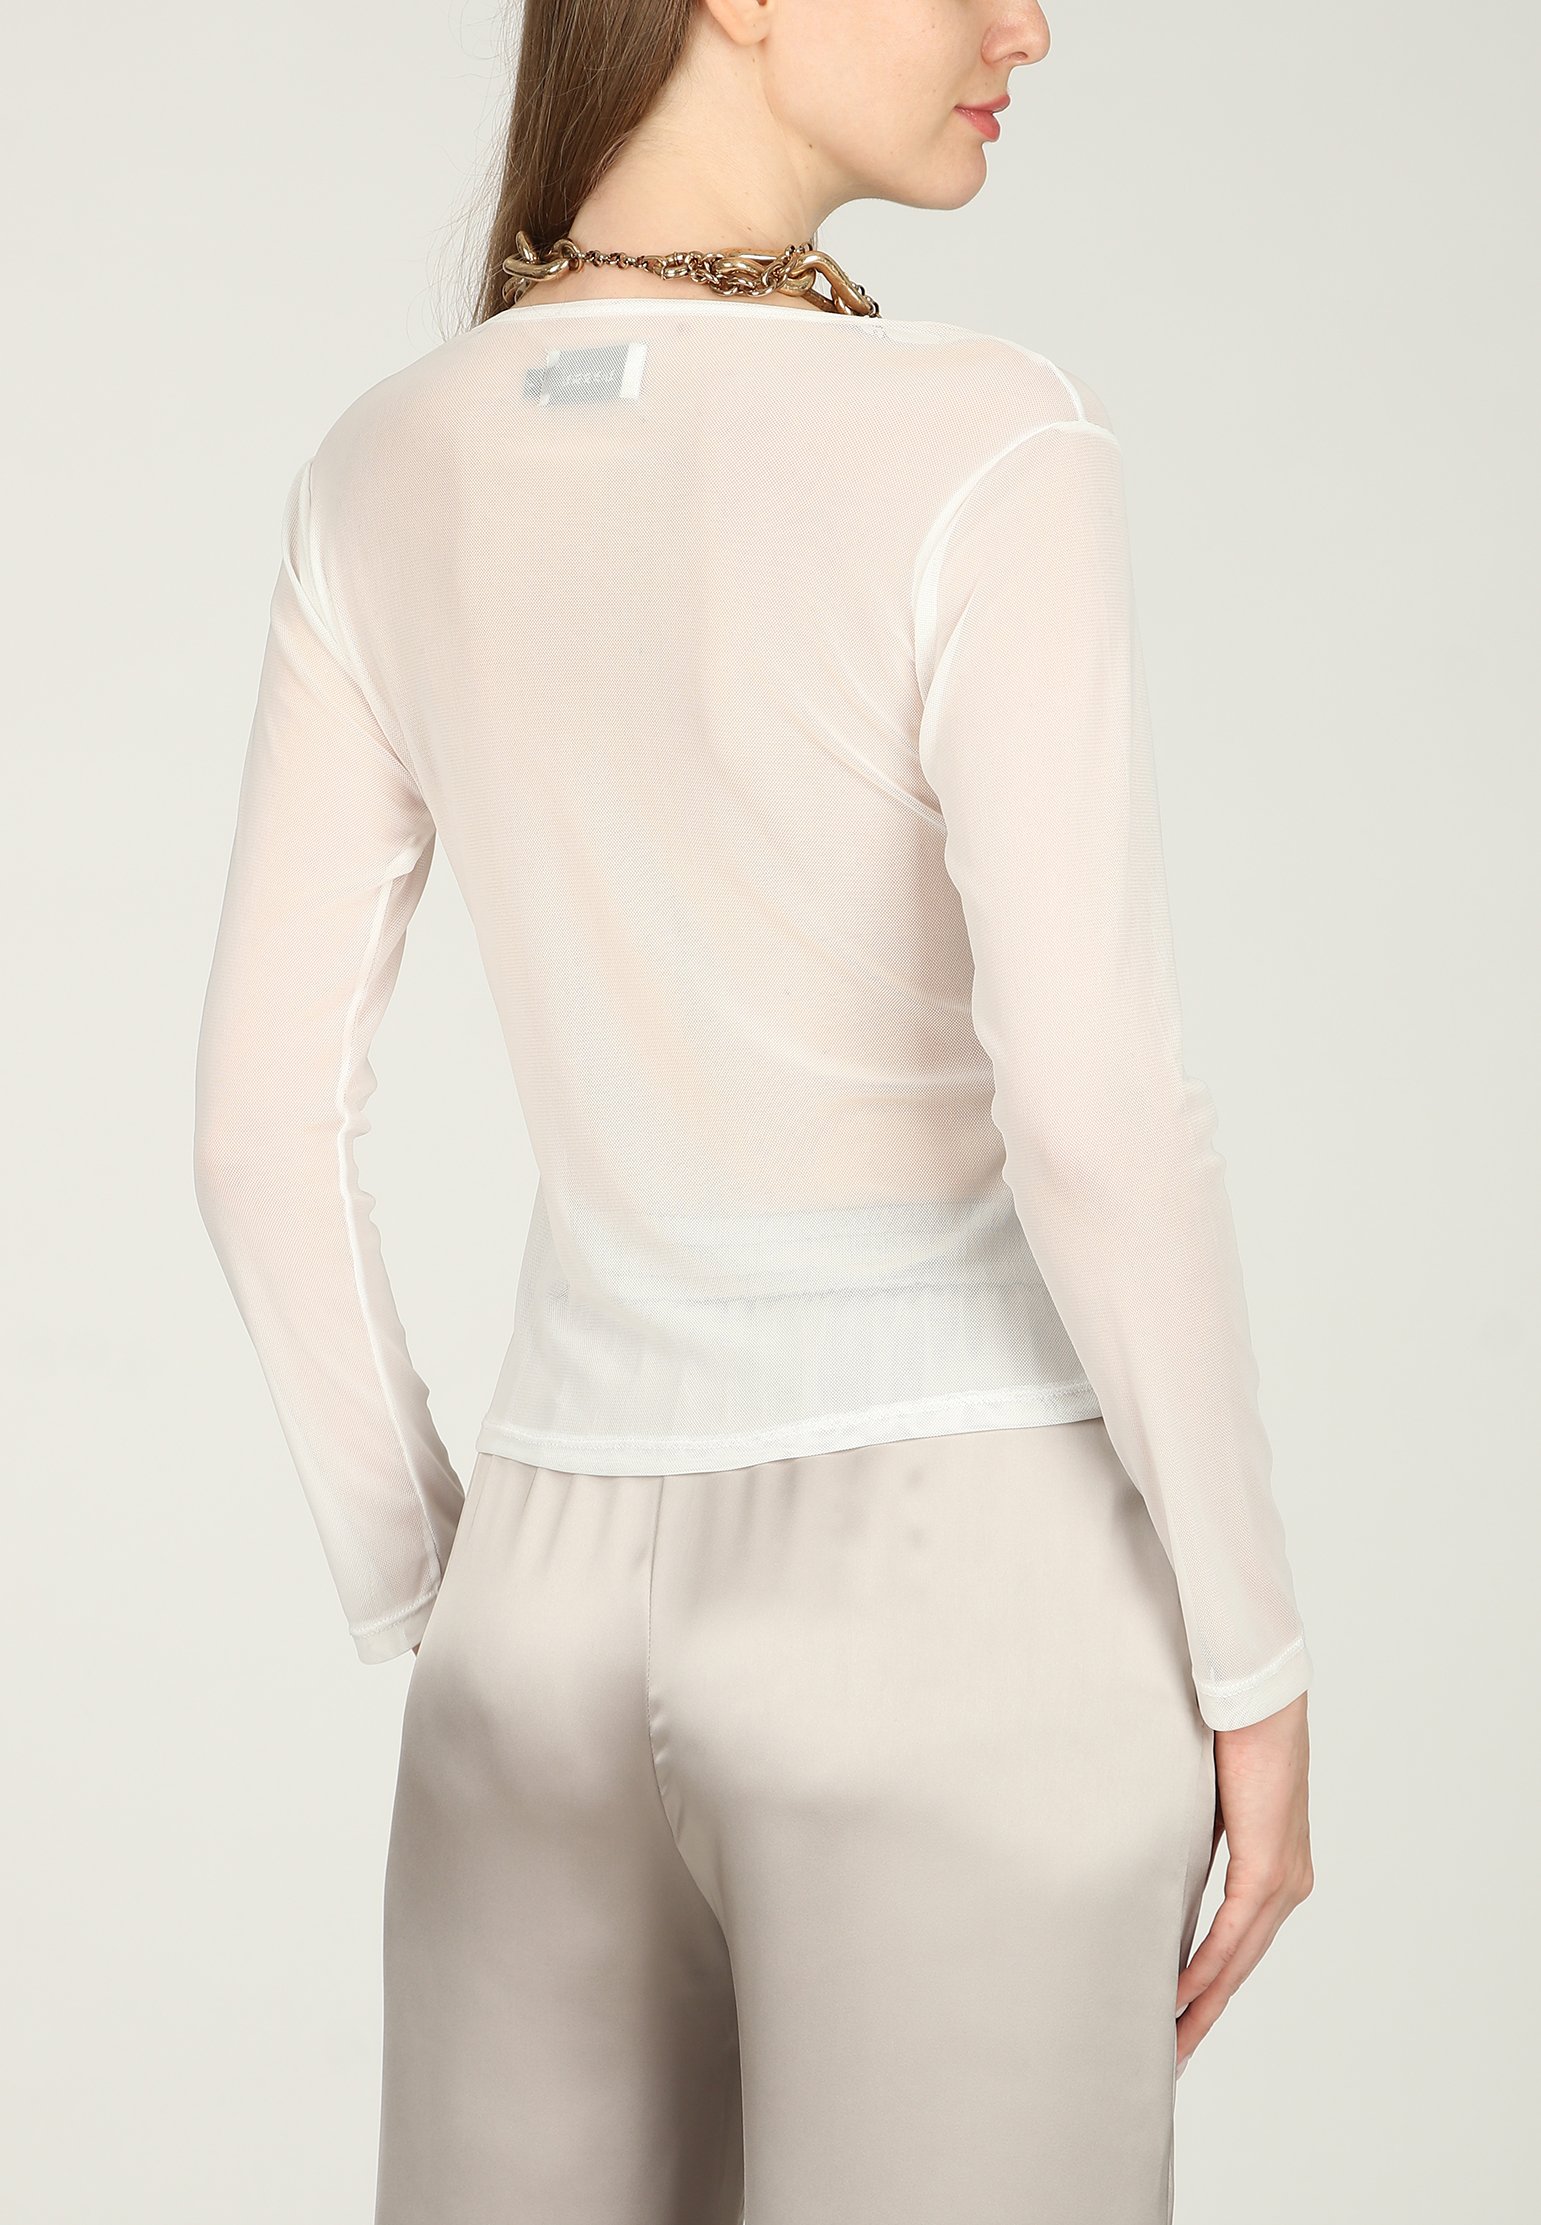 Blouse ALESSA Color: white (Code: 3266) in online store Allure